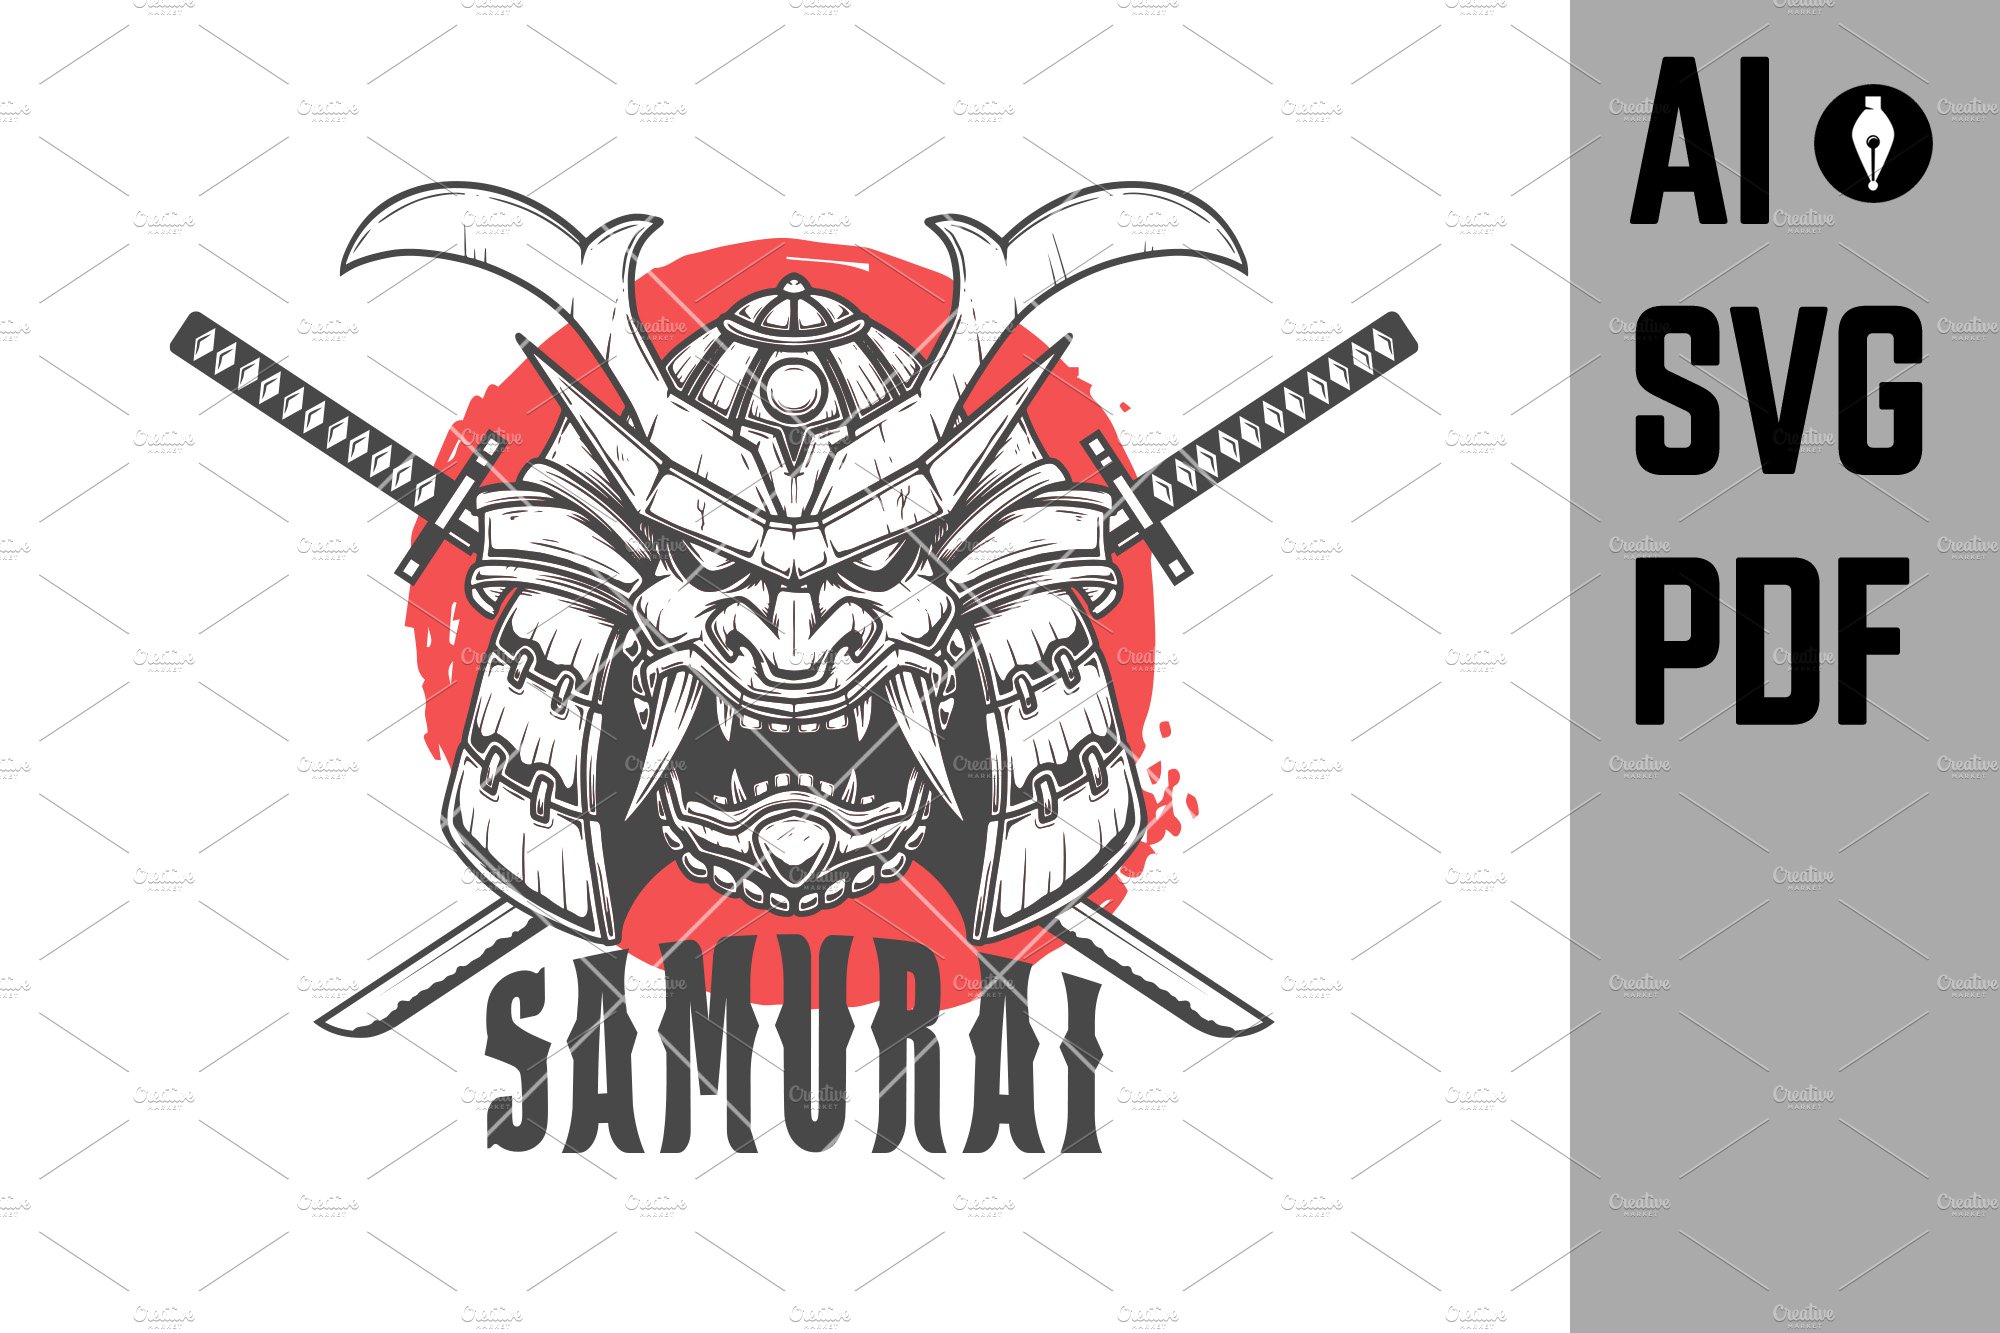 Samurai helmet with crossed swords. cover image.